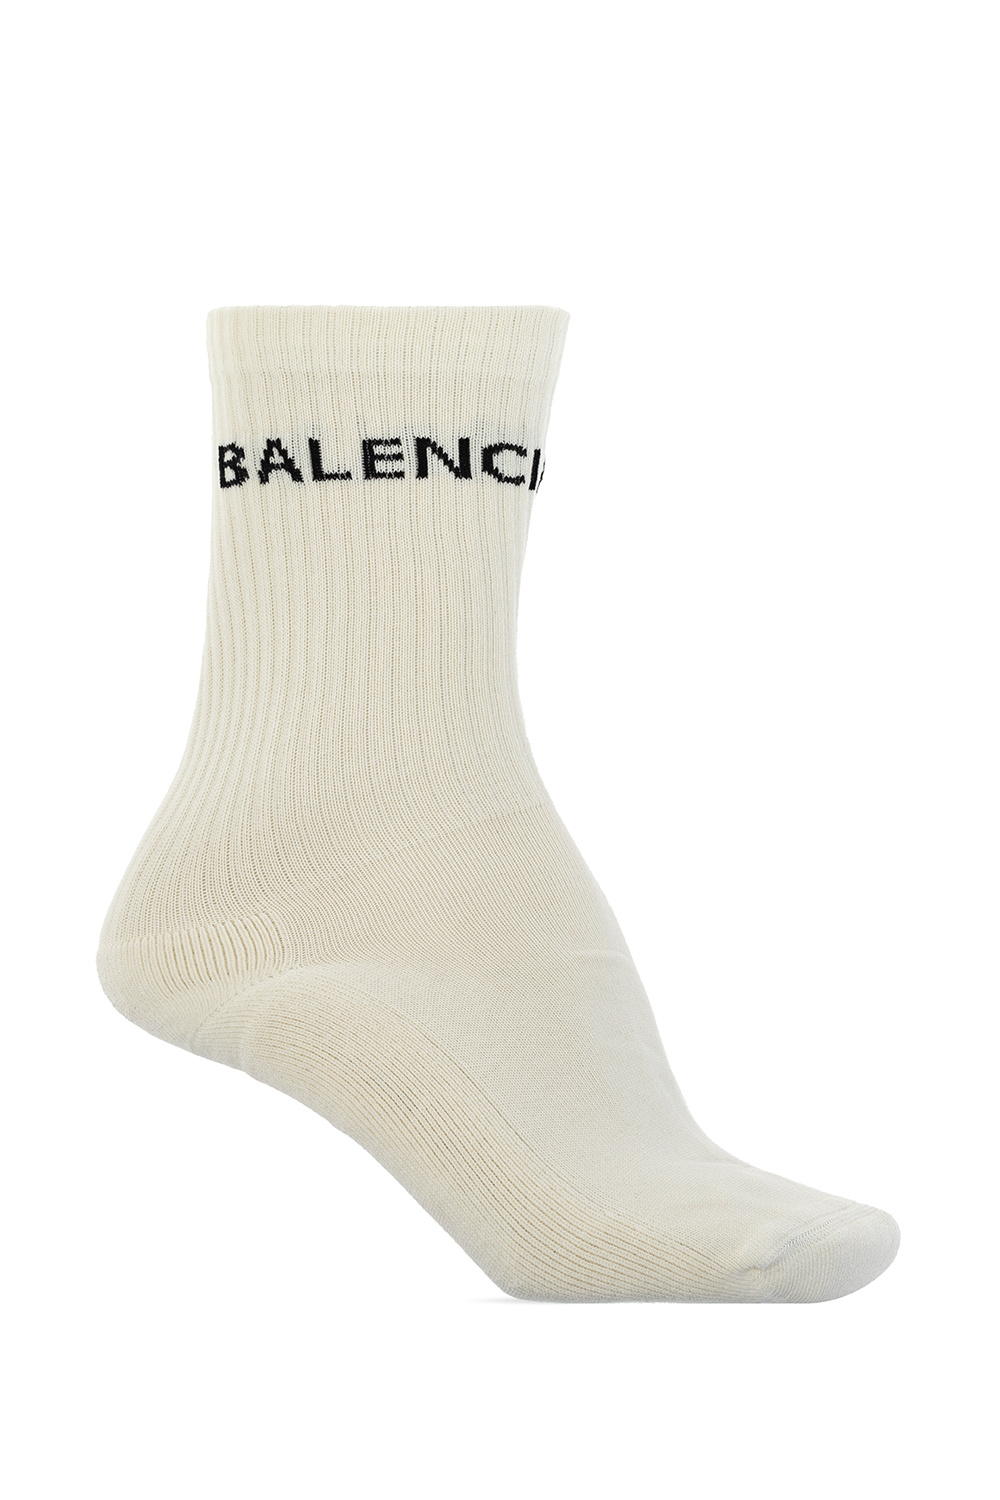 Balenciaga THE MOST INTERESTING TRENDS FOR THE SPRING/SUMMER SEASON